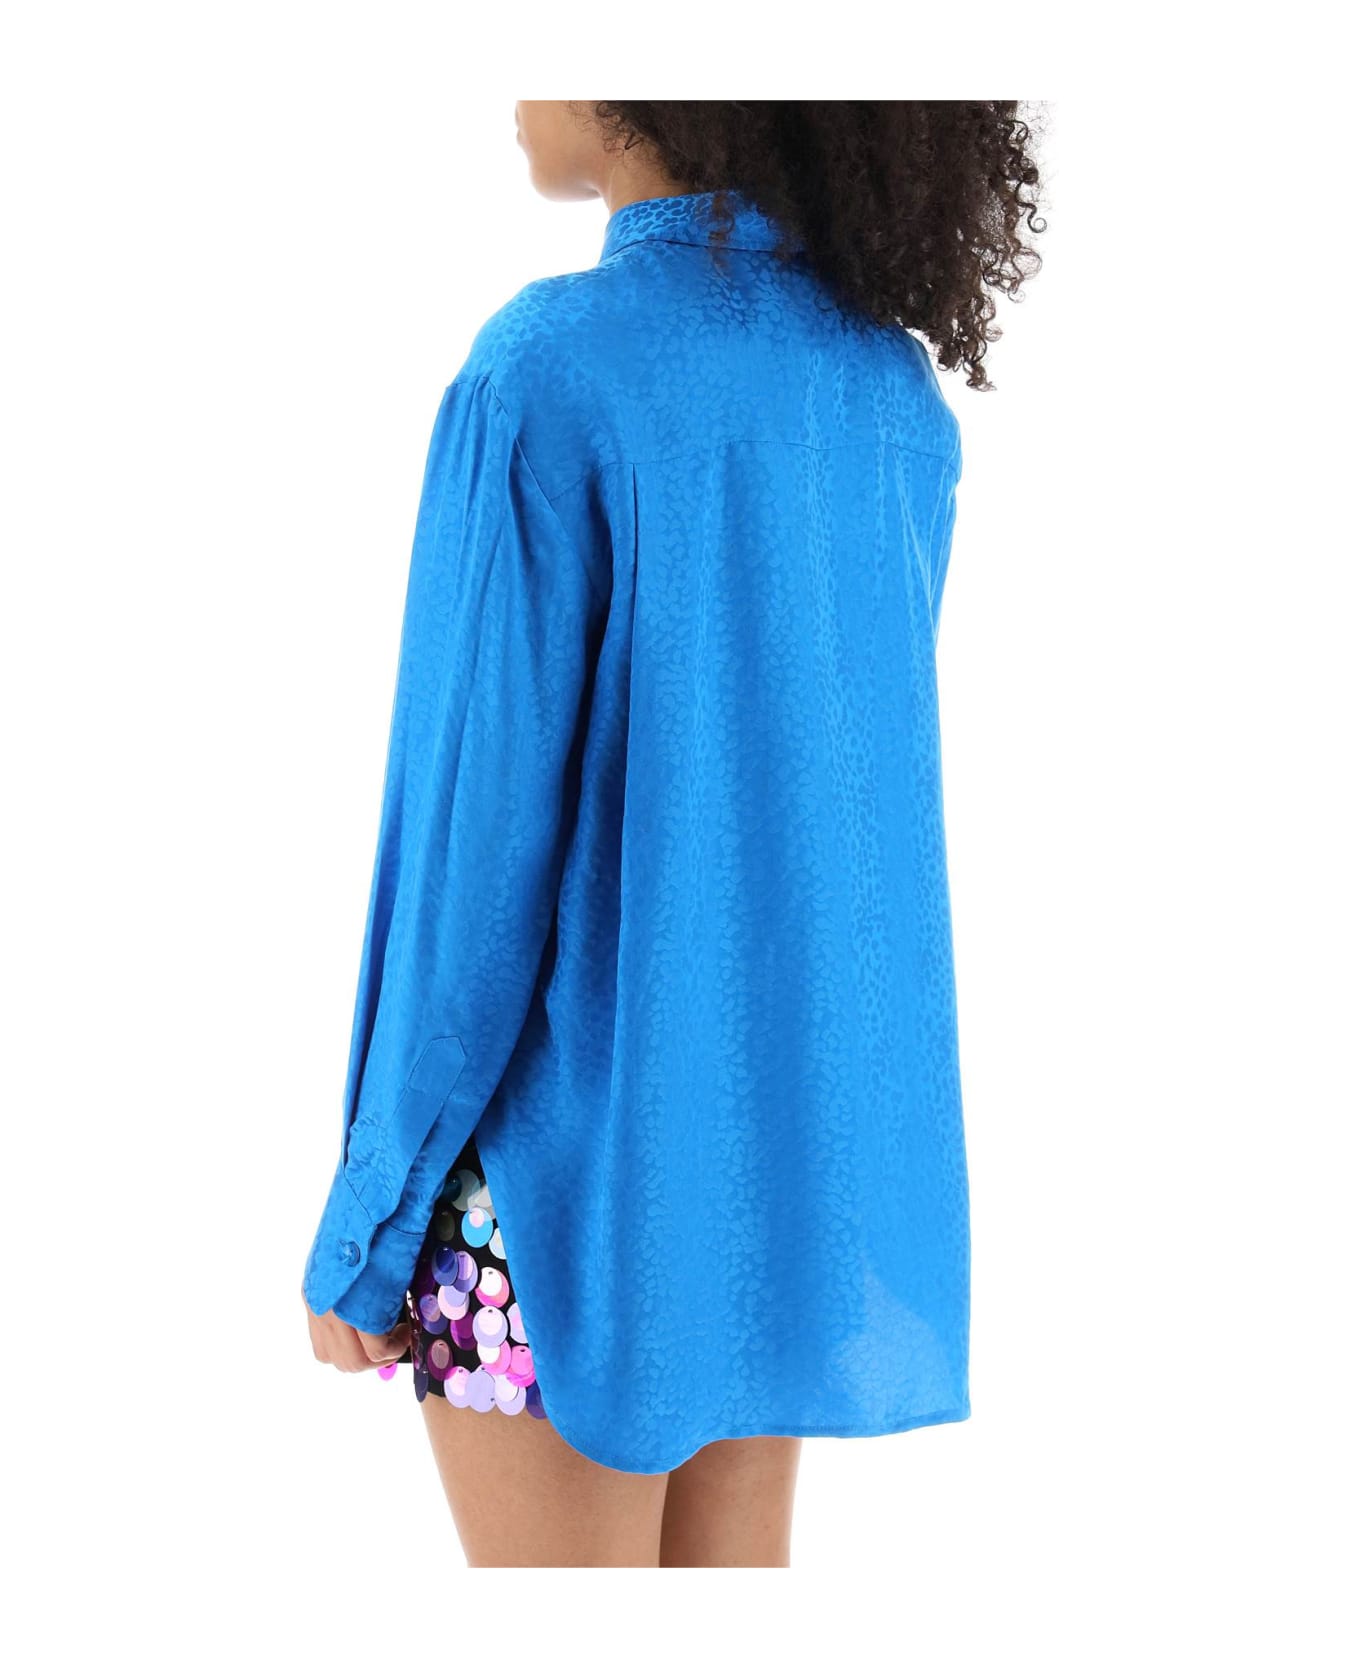 Art Dealer Charlie Shirt In Jacquard Silk - BLUE (Blue)